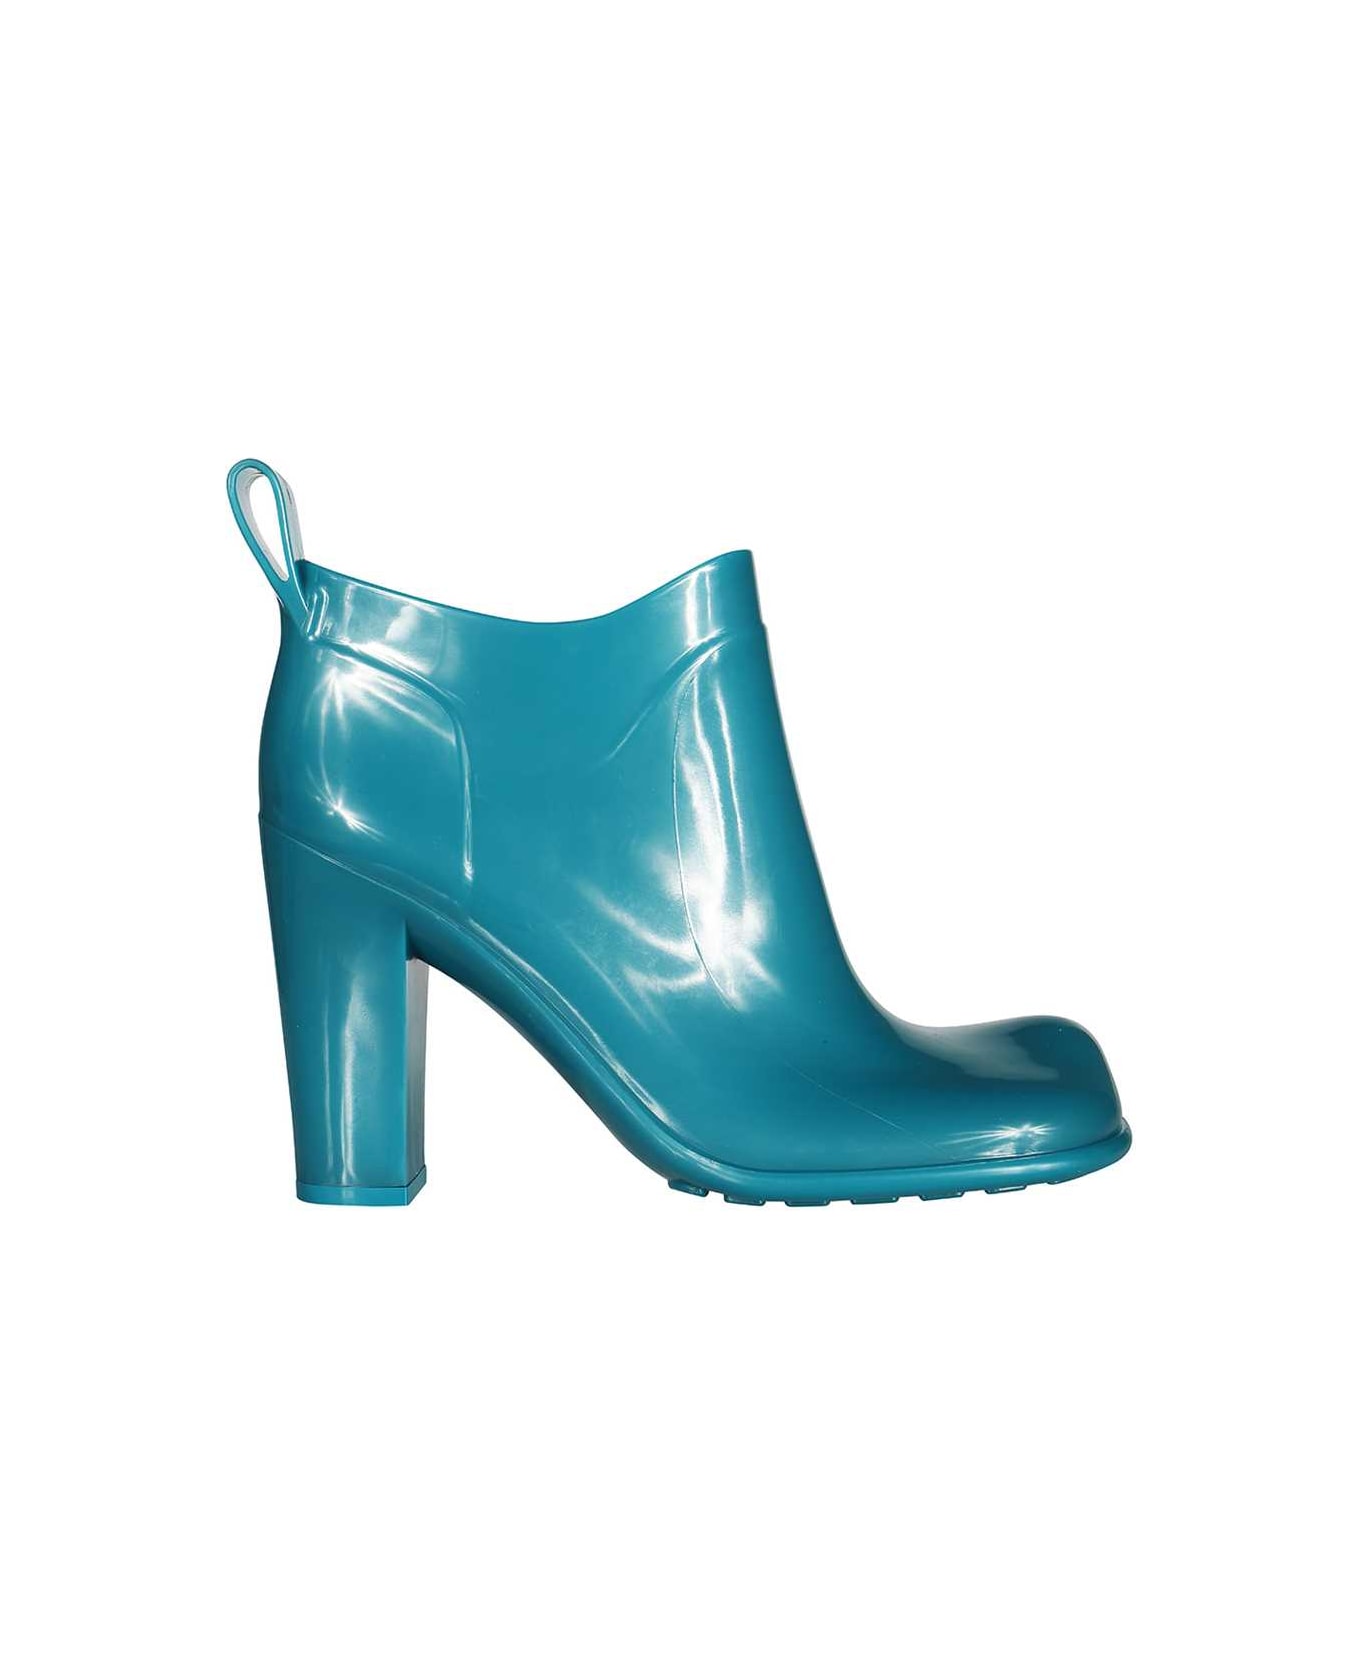 Bottega Veneta Shine Rubber Boots - turquoise